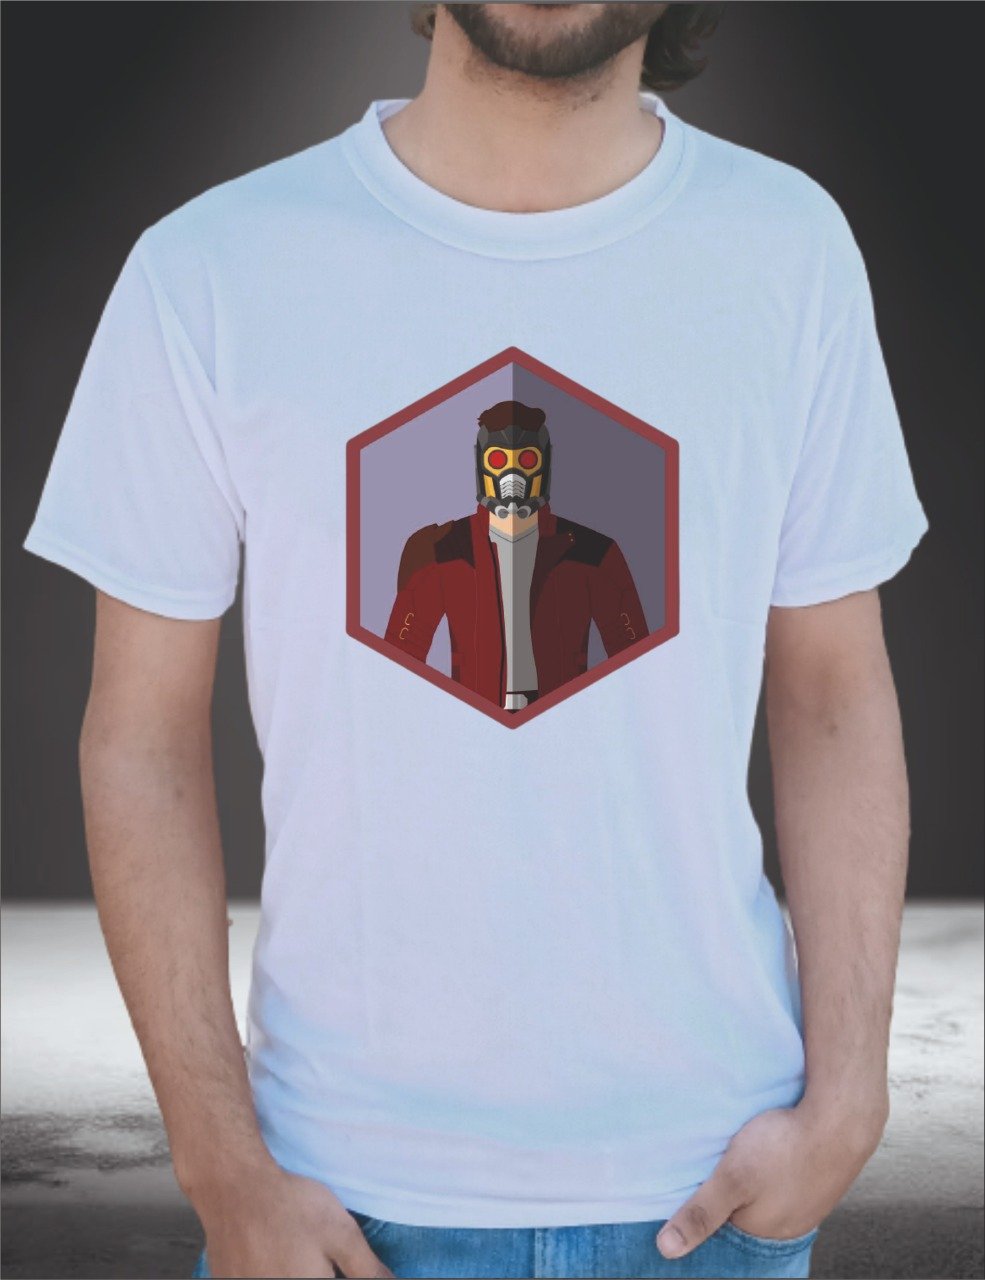 AntMan Printed T-Shirt for Men (Half Sleeve)